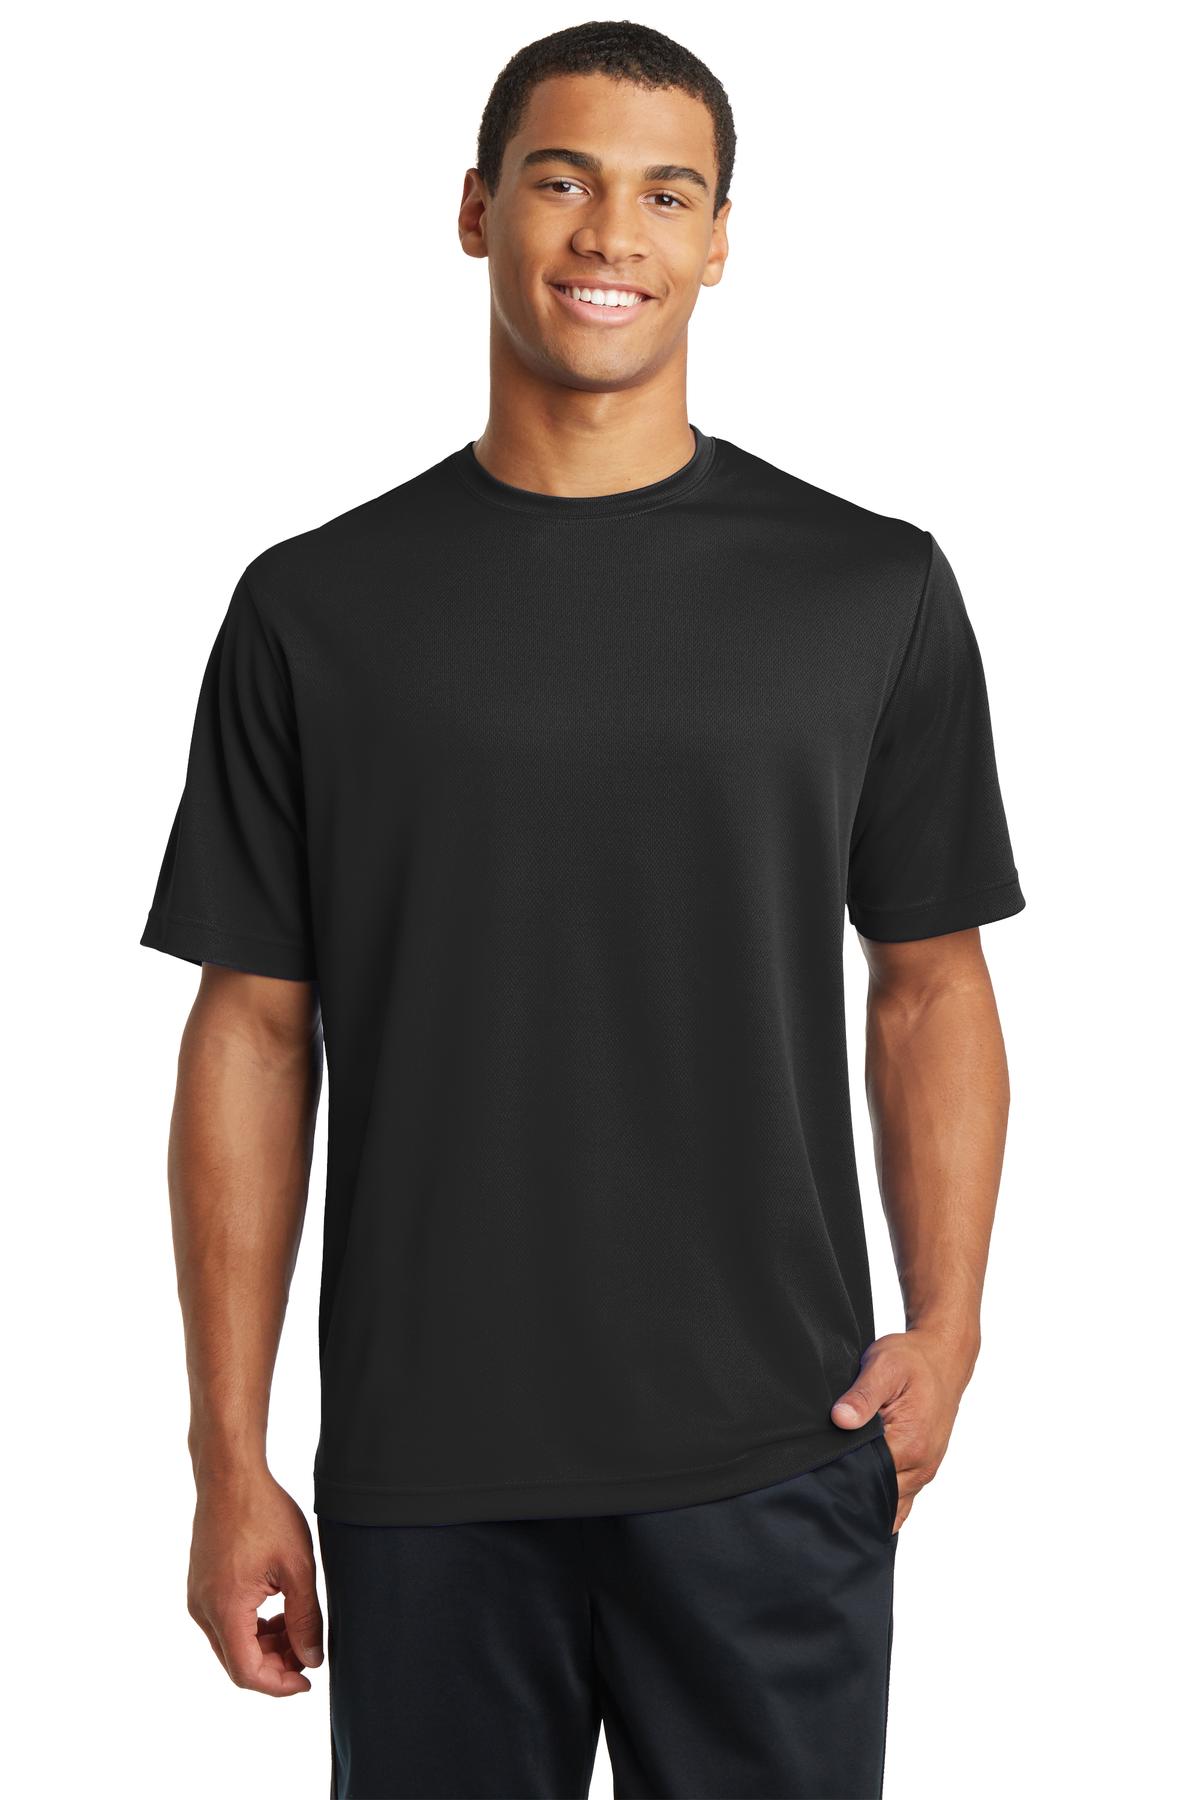 Sport-Tek Activewear T-Shirts for Hospitality ® PosiCharge® RacerMesh® Tee.-Sport-Tek